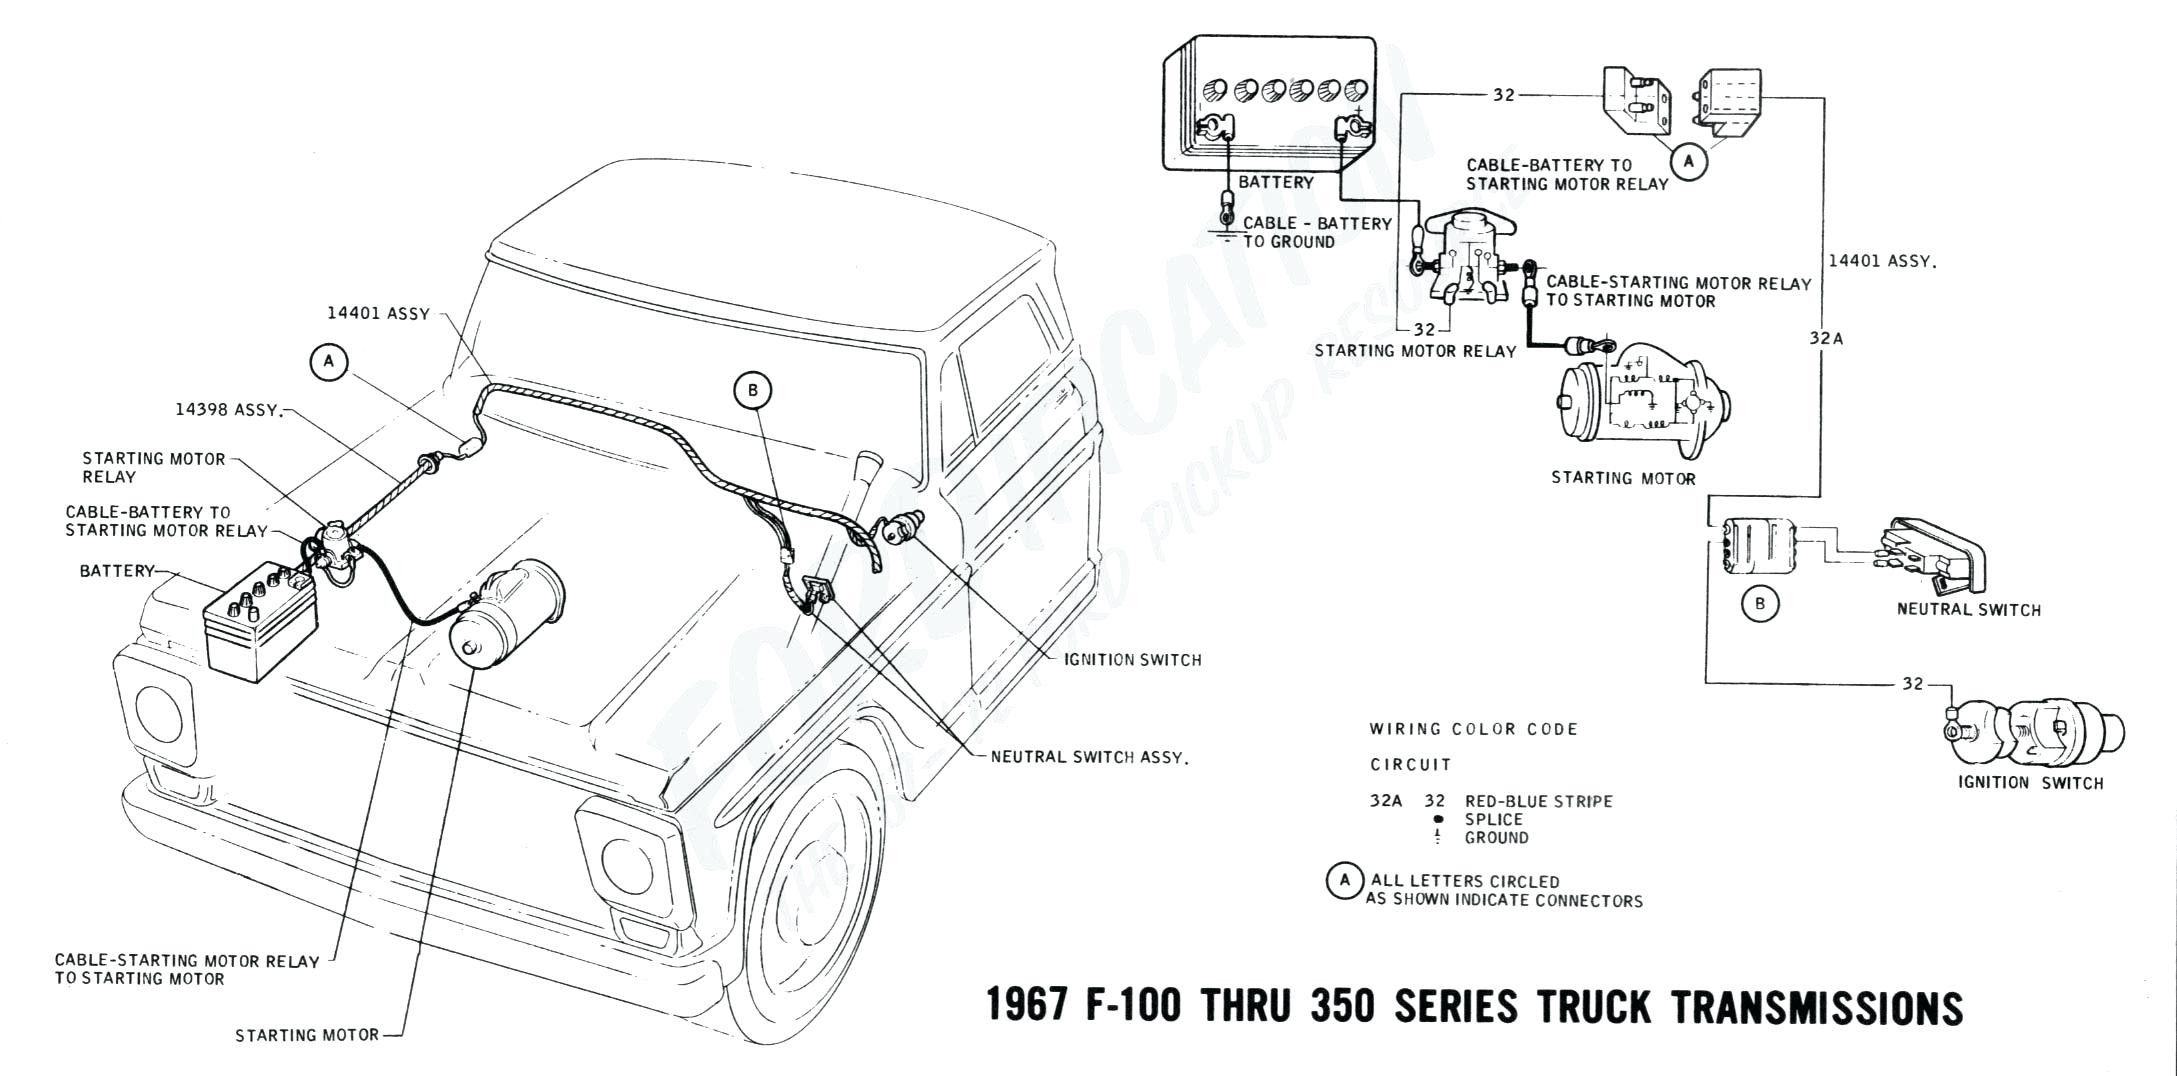 1991 Ford F150 Starter Solenoid Wiring Diagram Elegant